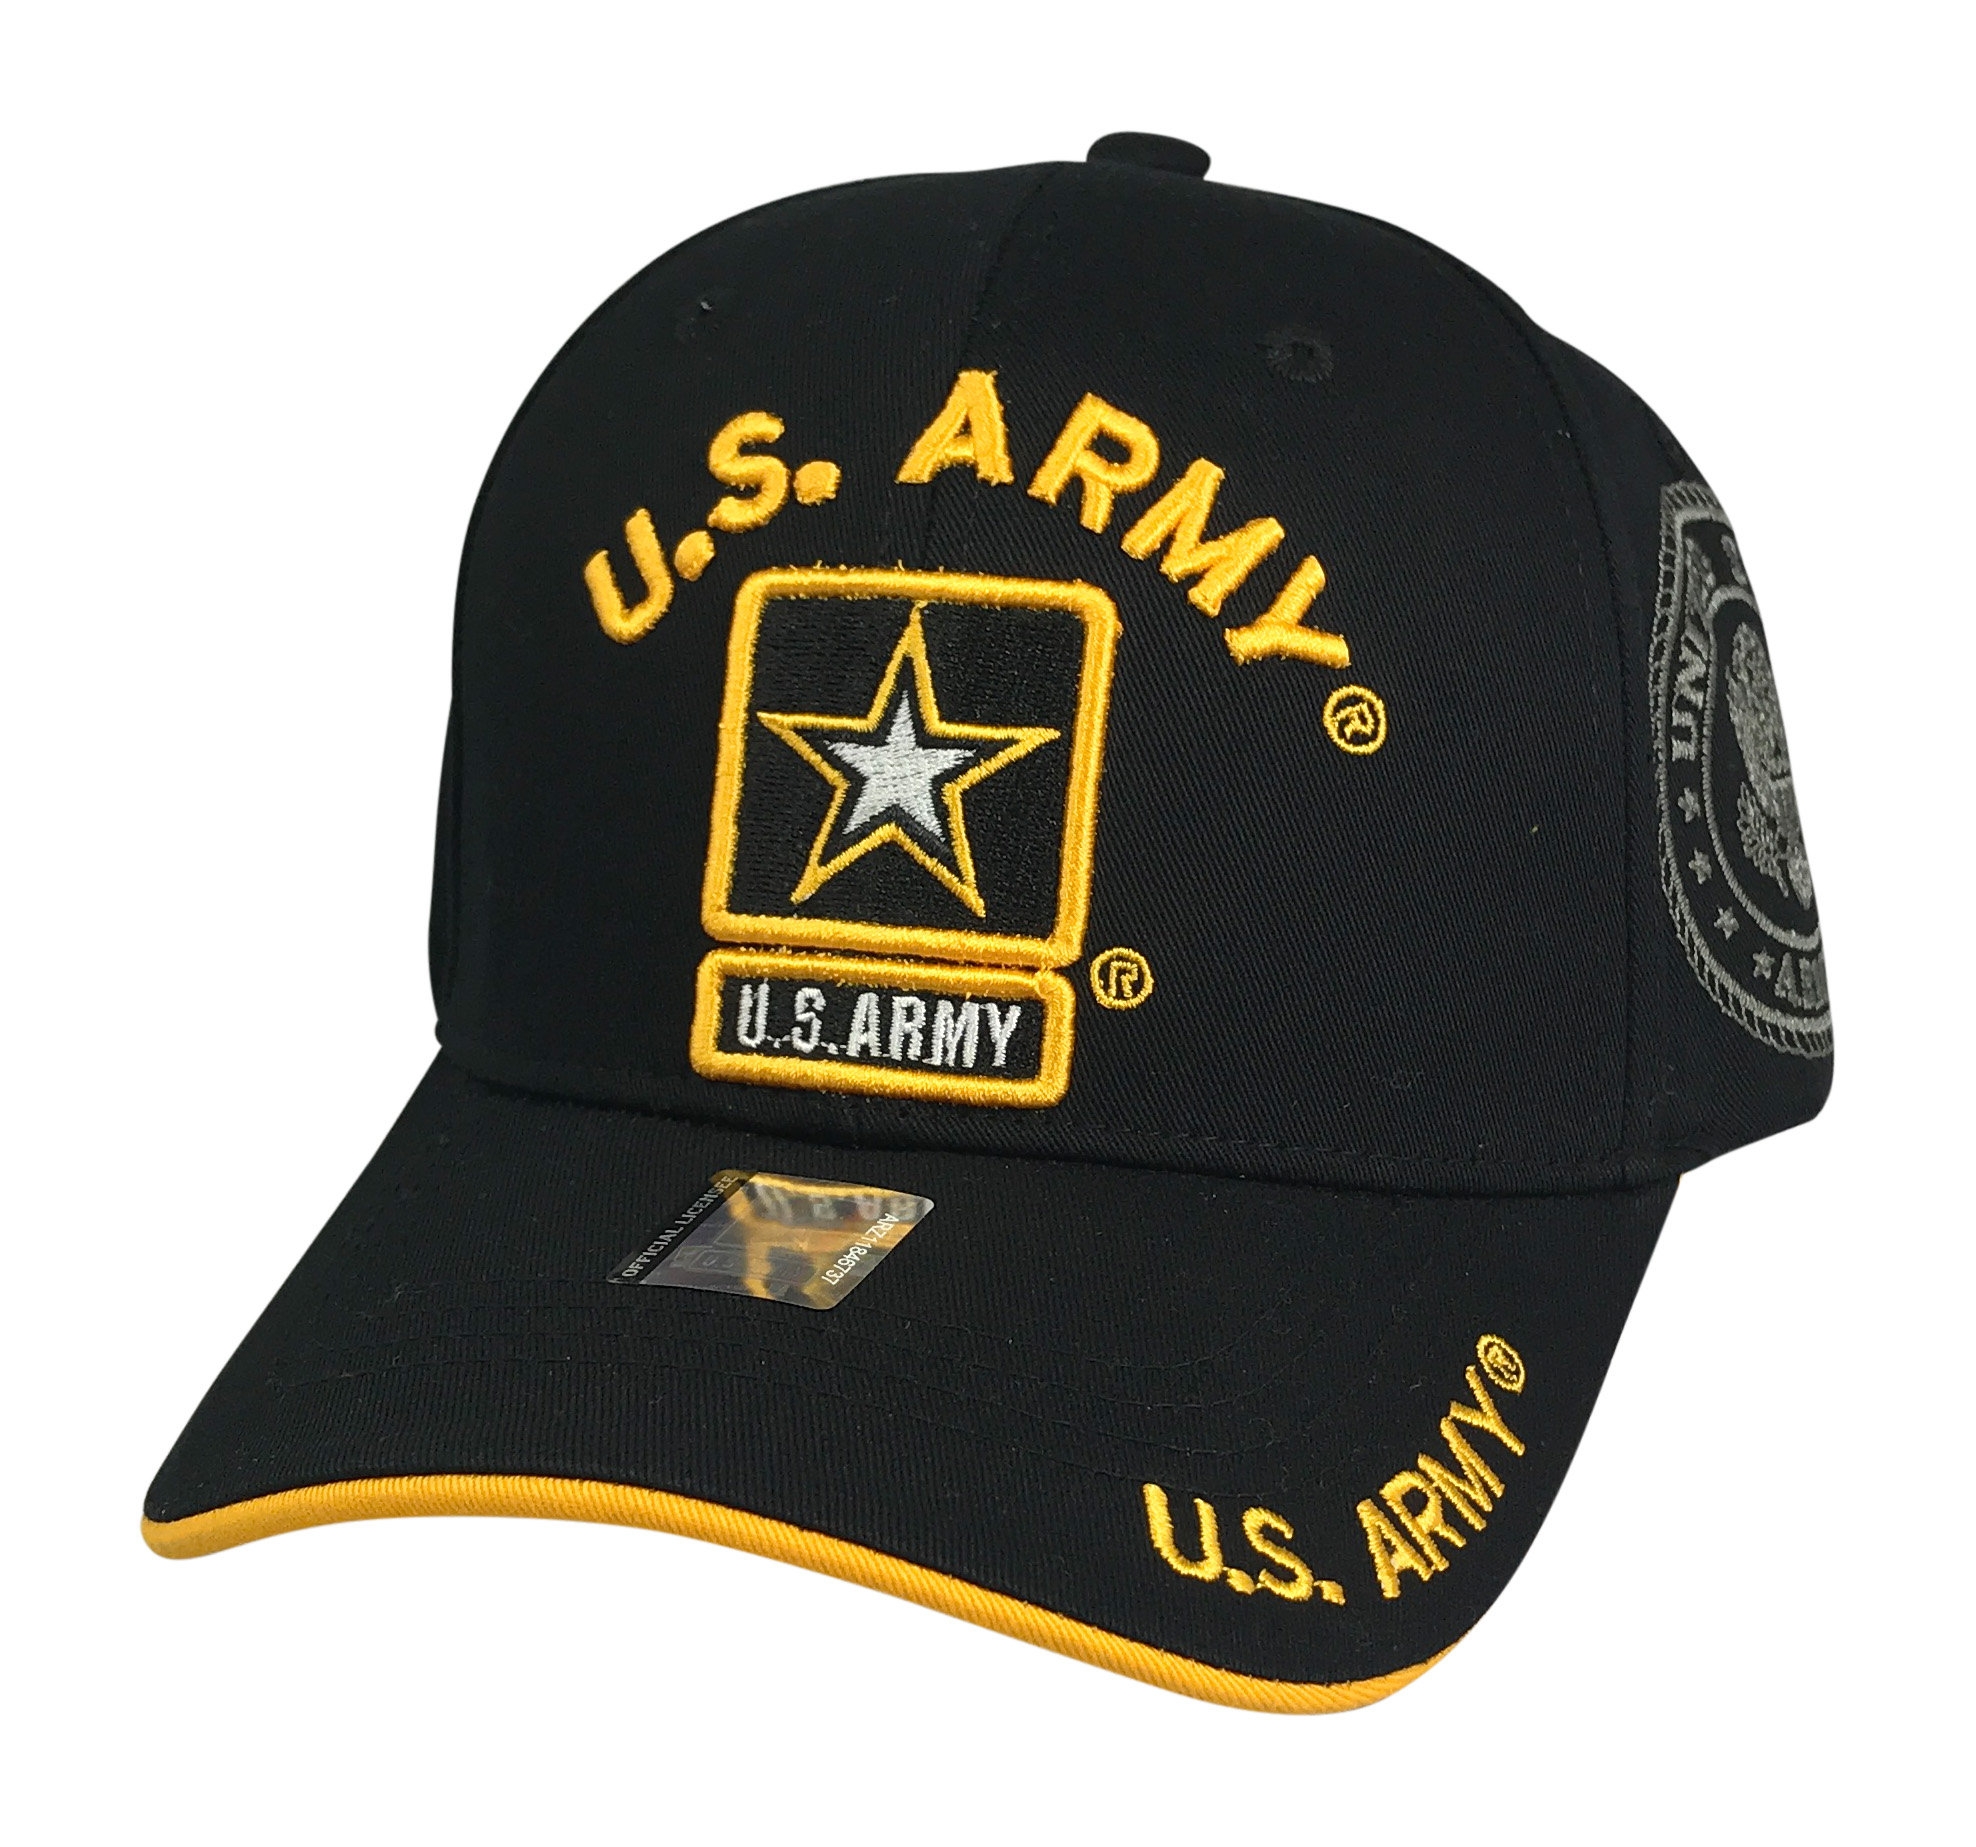 United States Army HAT with Army Star Logo - A04ARM01-BK/GD